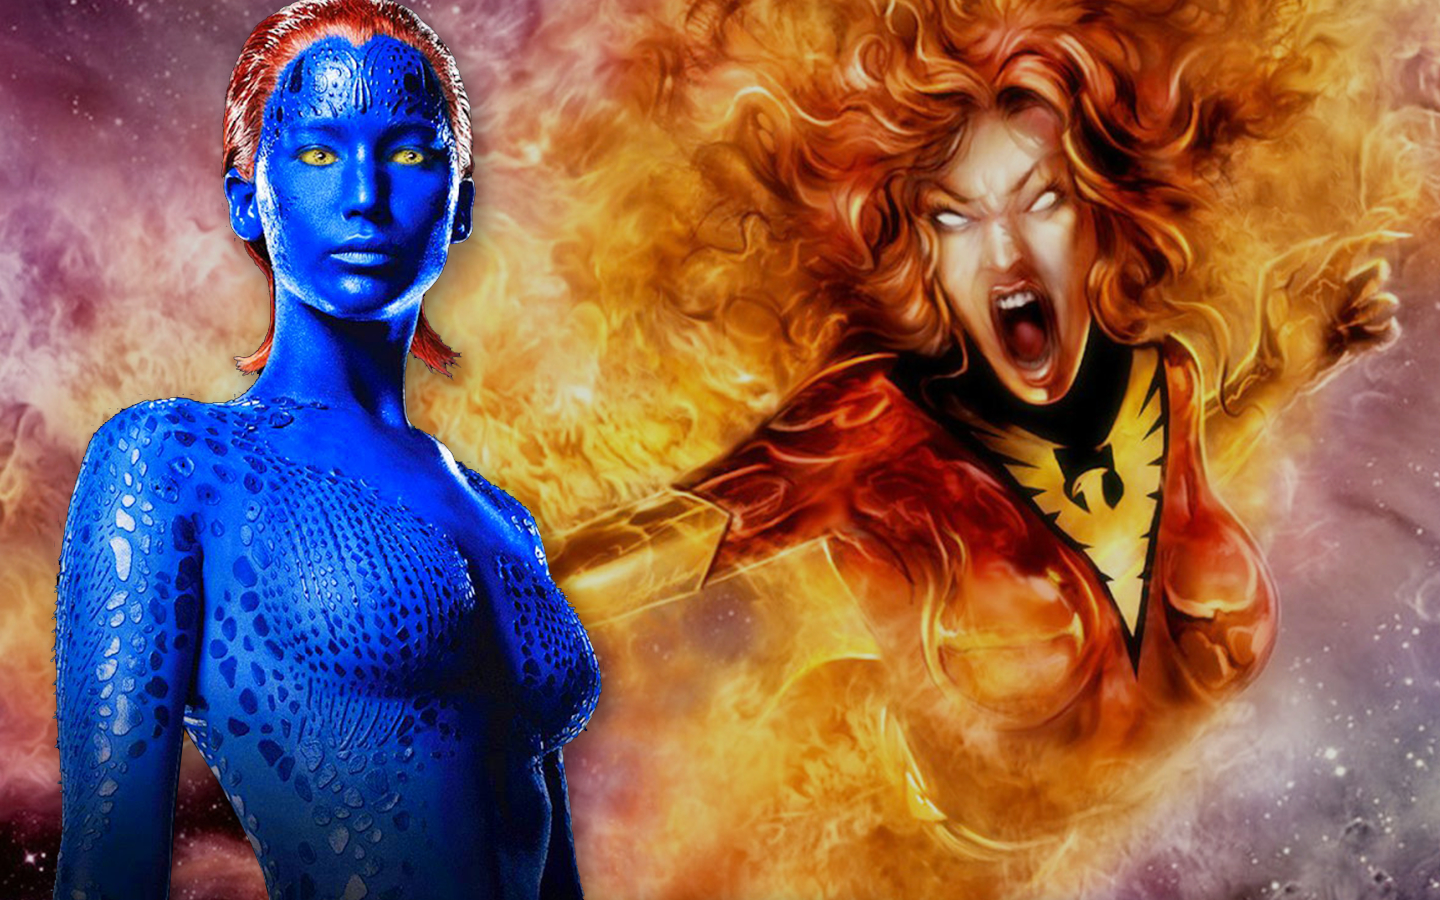 Mystique May Appear in ‘X-men: Dark Phoenix’